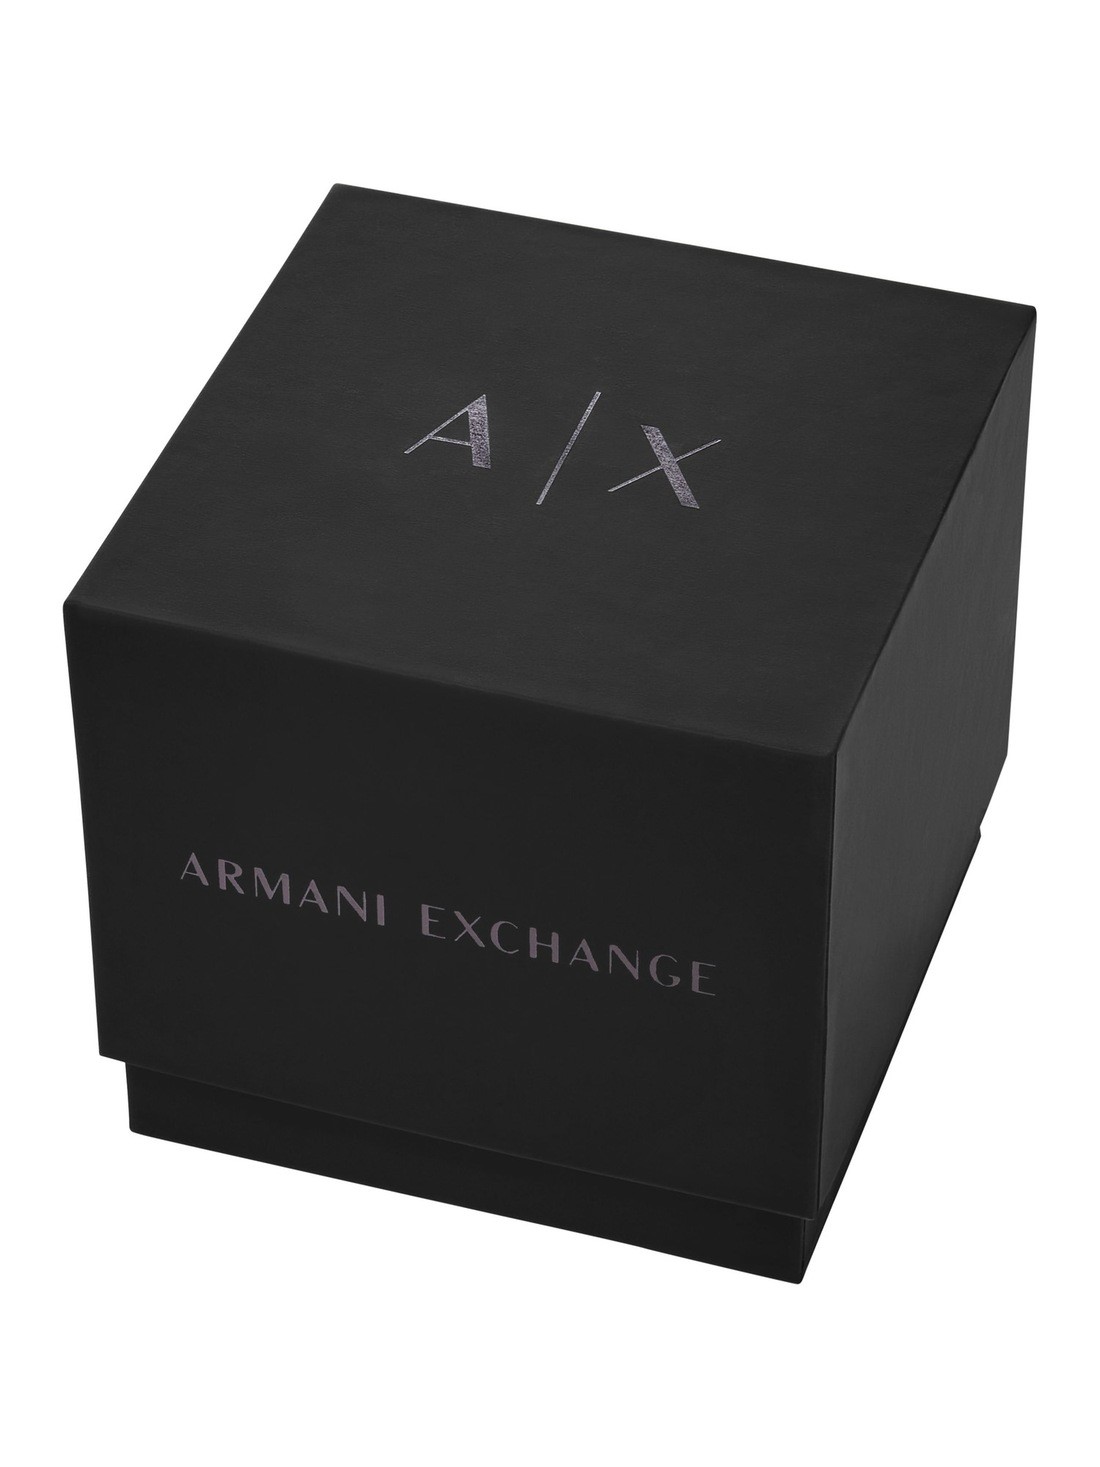 Armani Exchange Black Watch AX1867 - Watch Station India